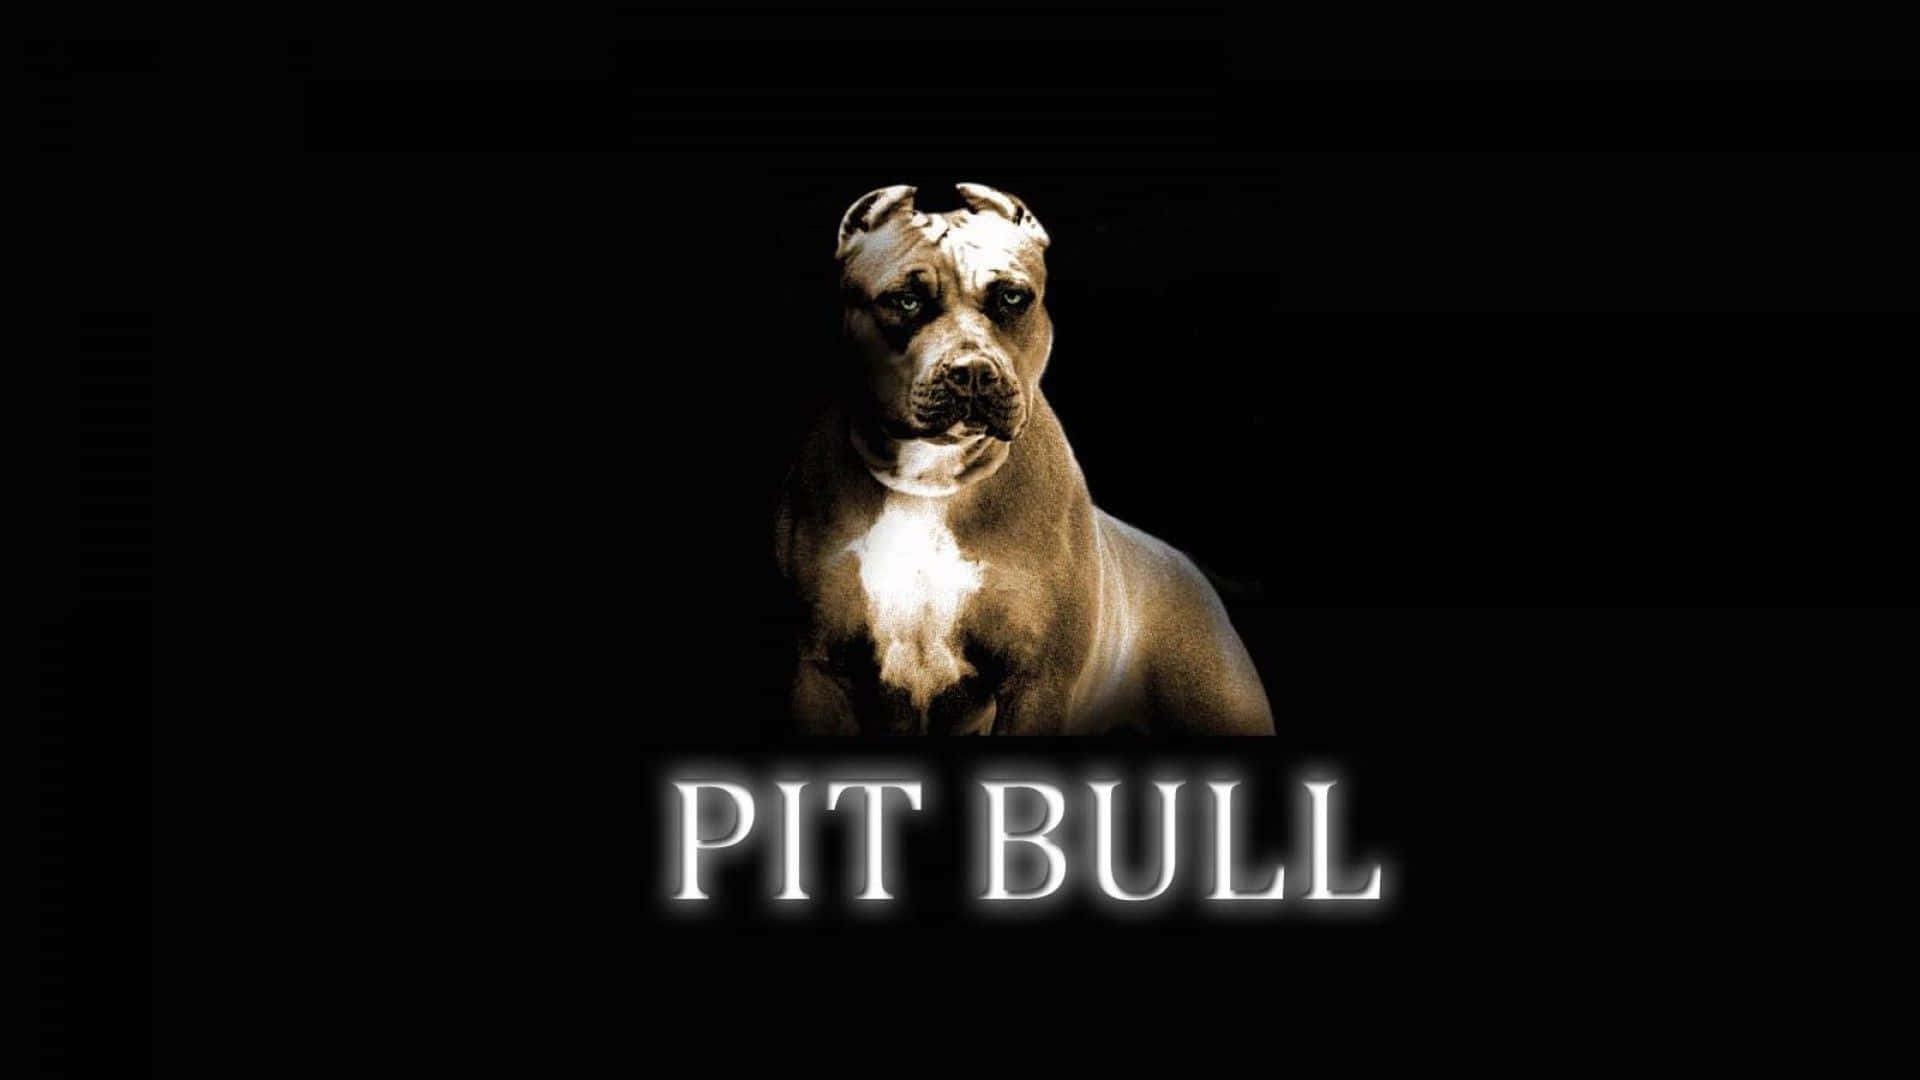 Pit Bull Logo On A Black Background